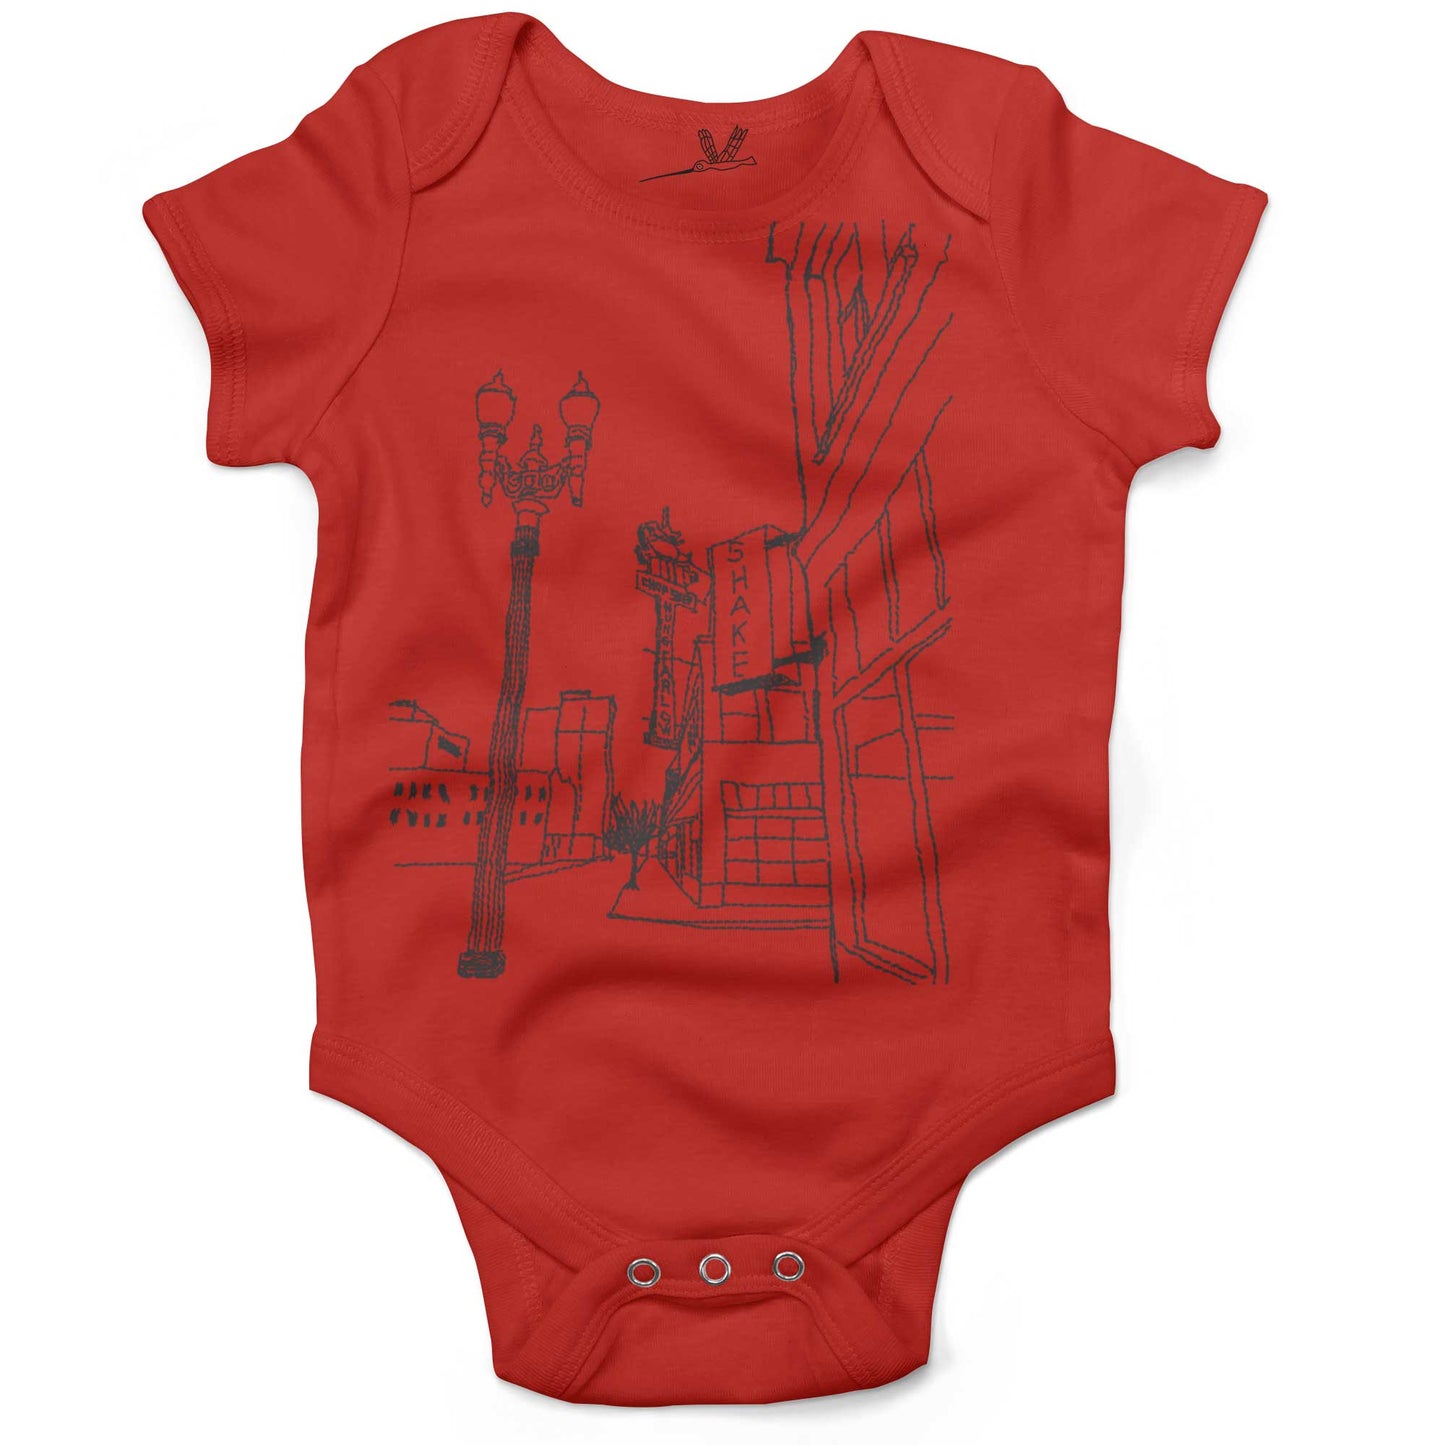 Hung Far Low Restaurant Infant Bodysuit-Organic Red-3-6 months